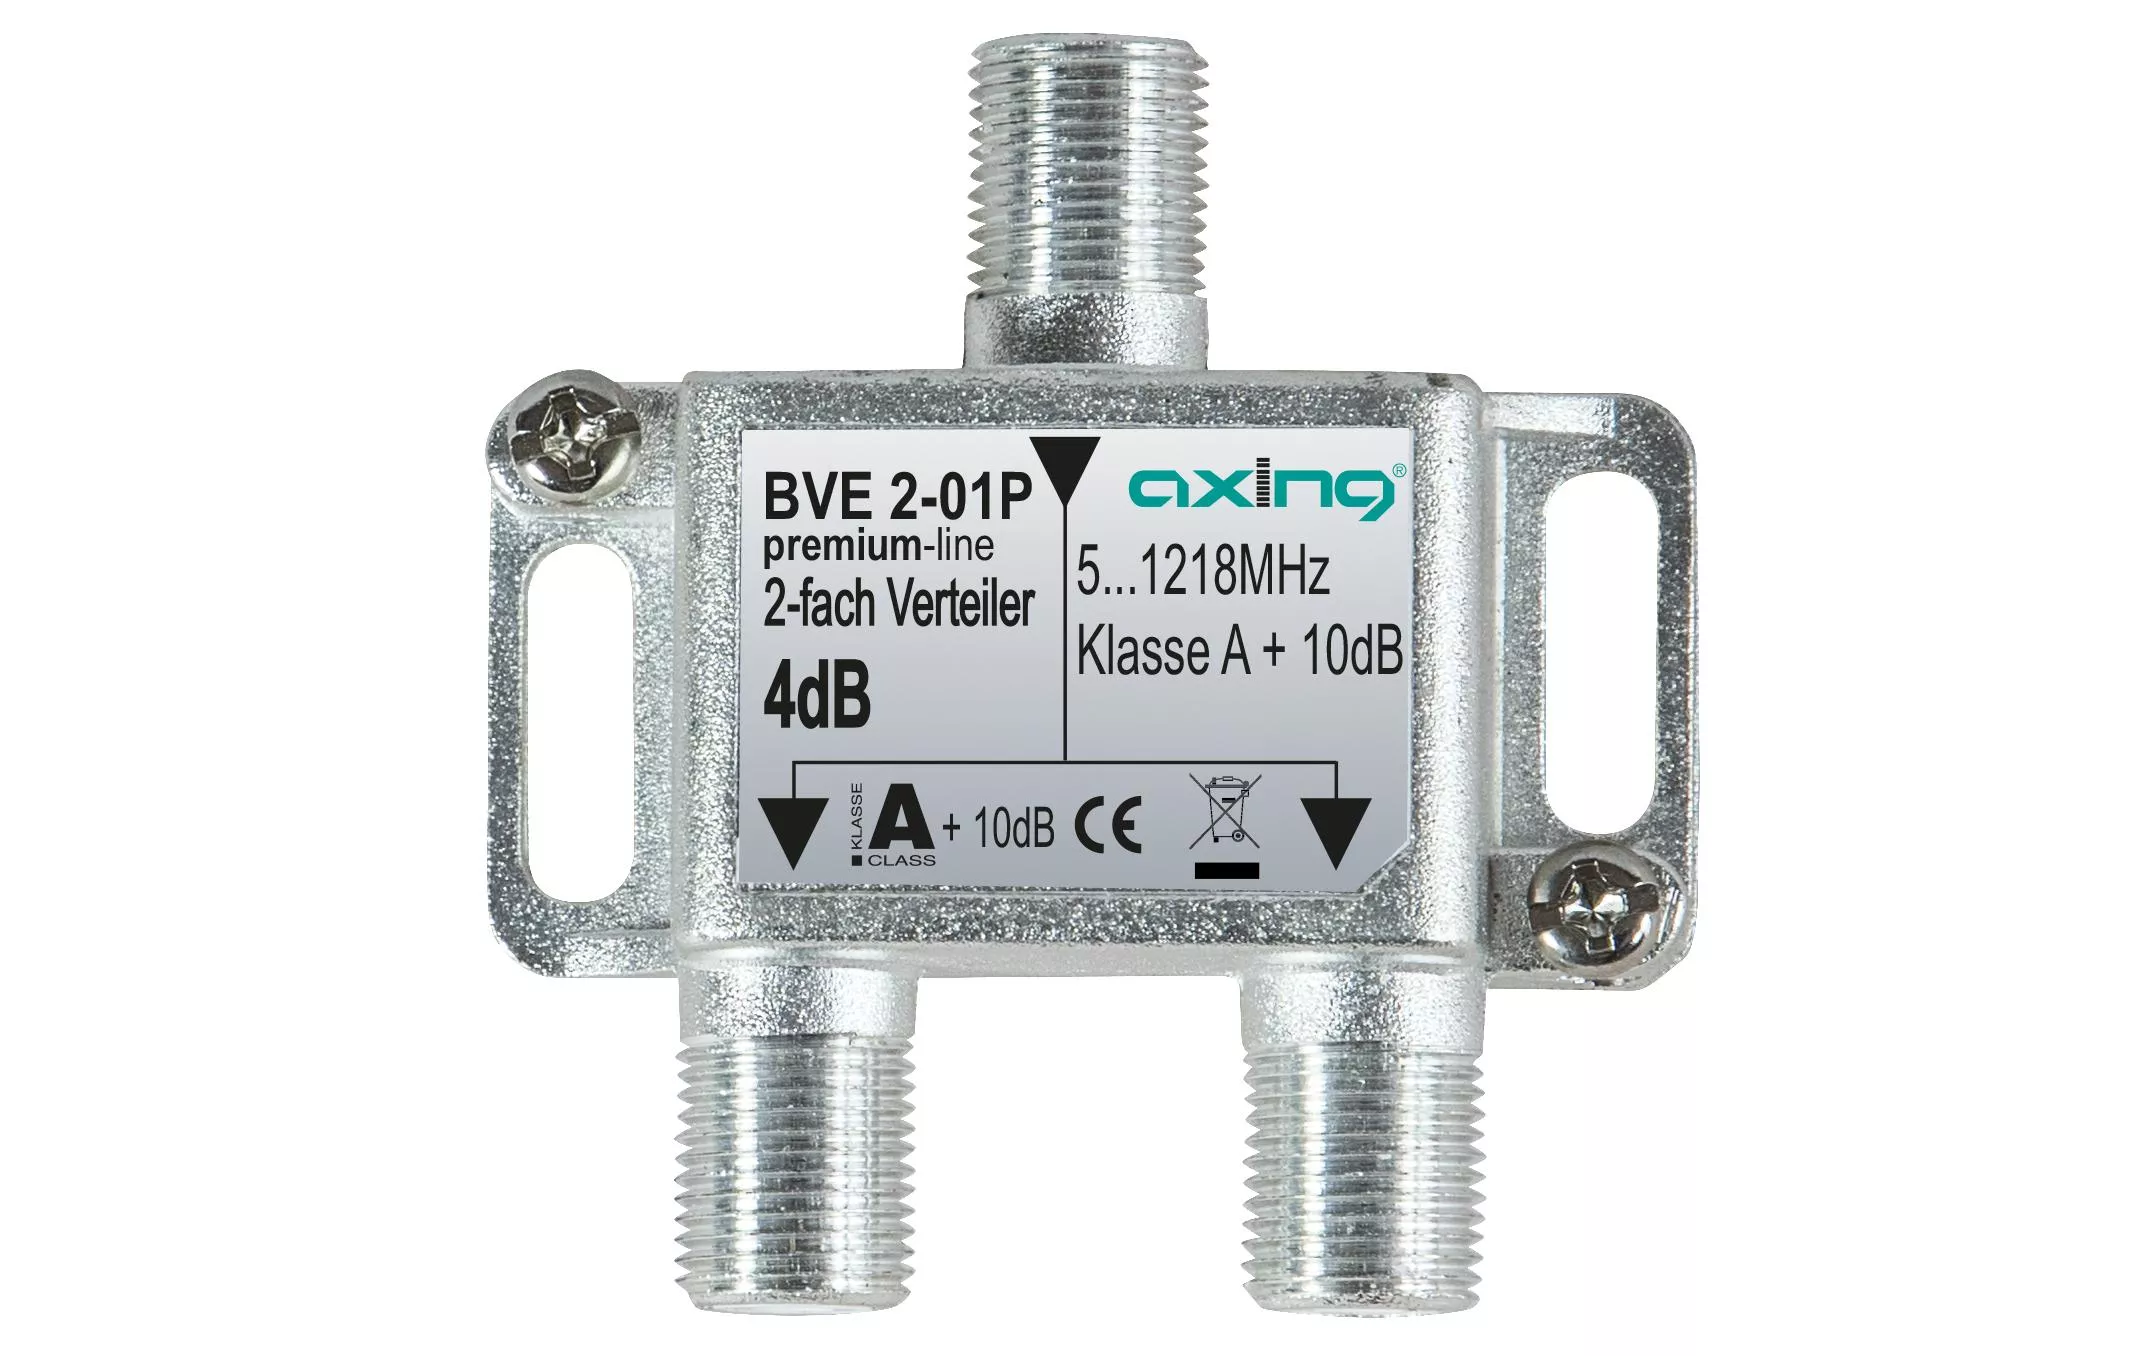 Distributore a 2 vie Axing BVE 2-01P 51218 MHz design 01